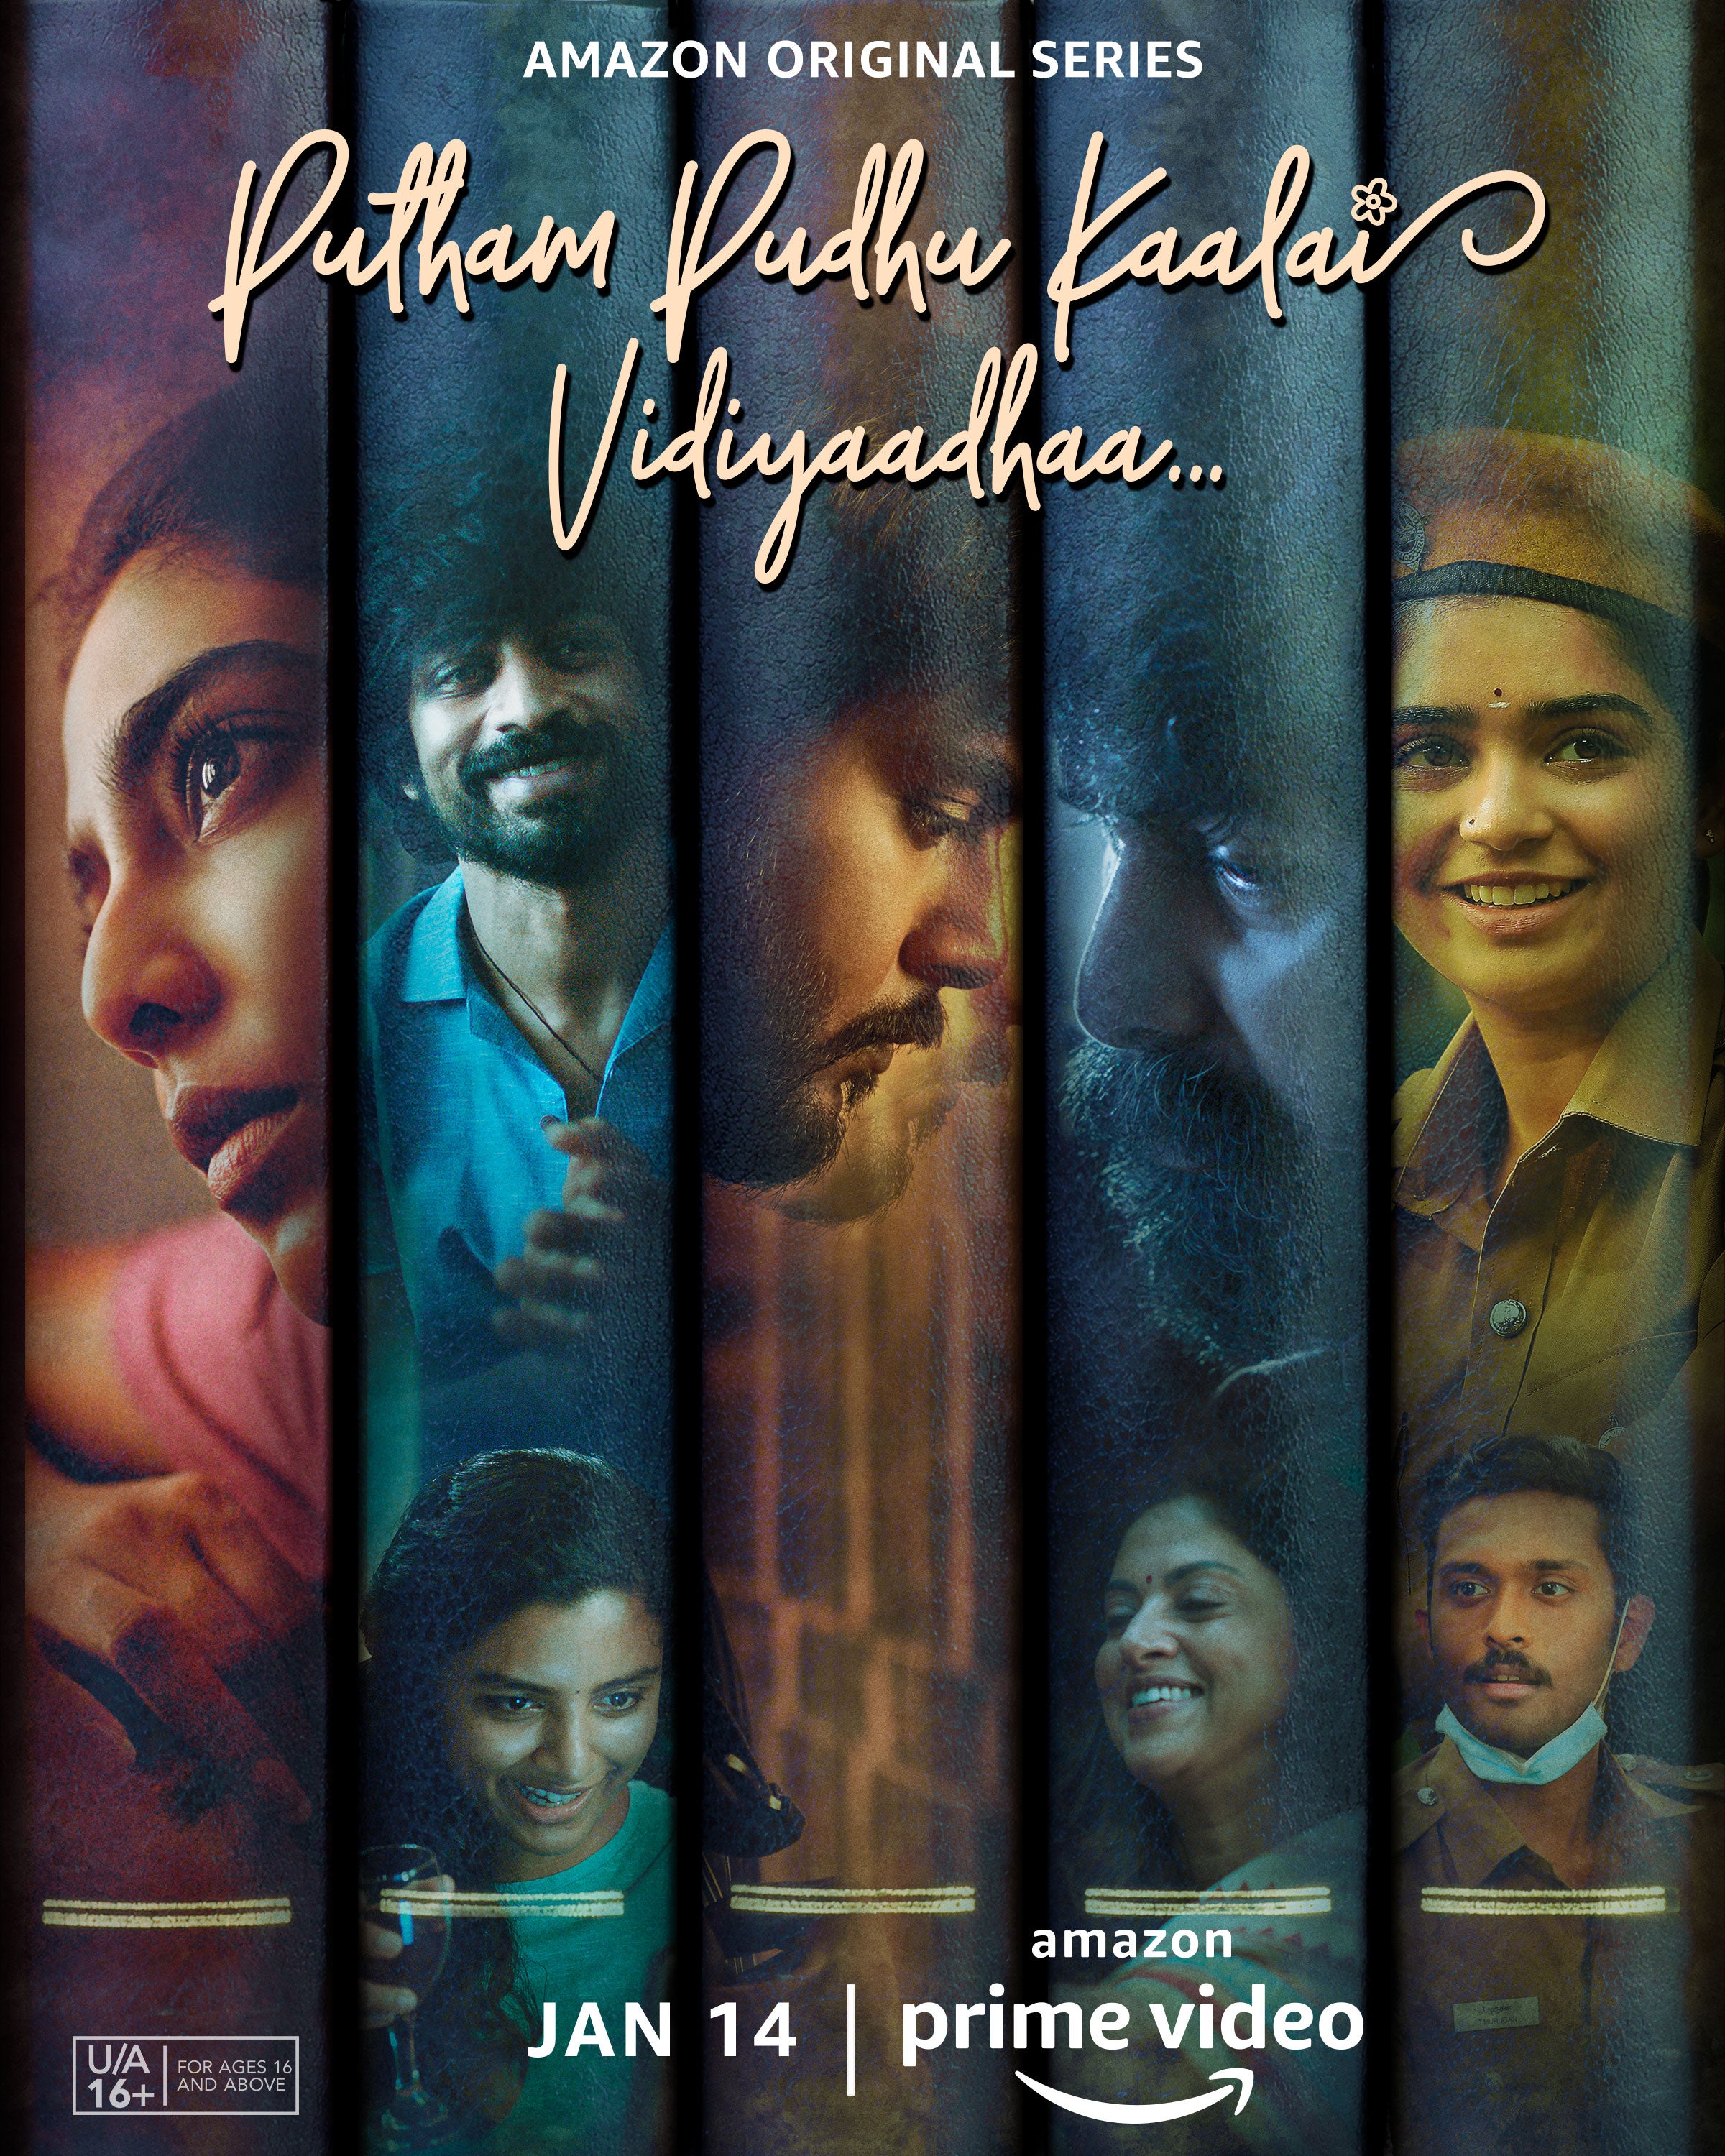 TV ratings for Putham Pudhu Kaalai Vidiyaadhaa in India. Amazon Prime Video TV series